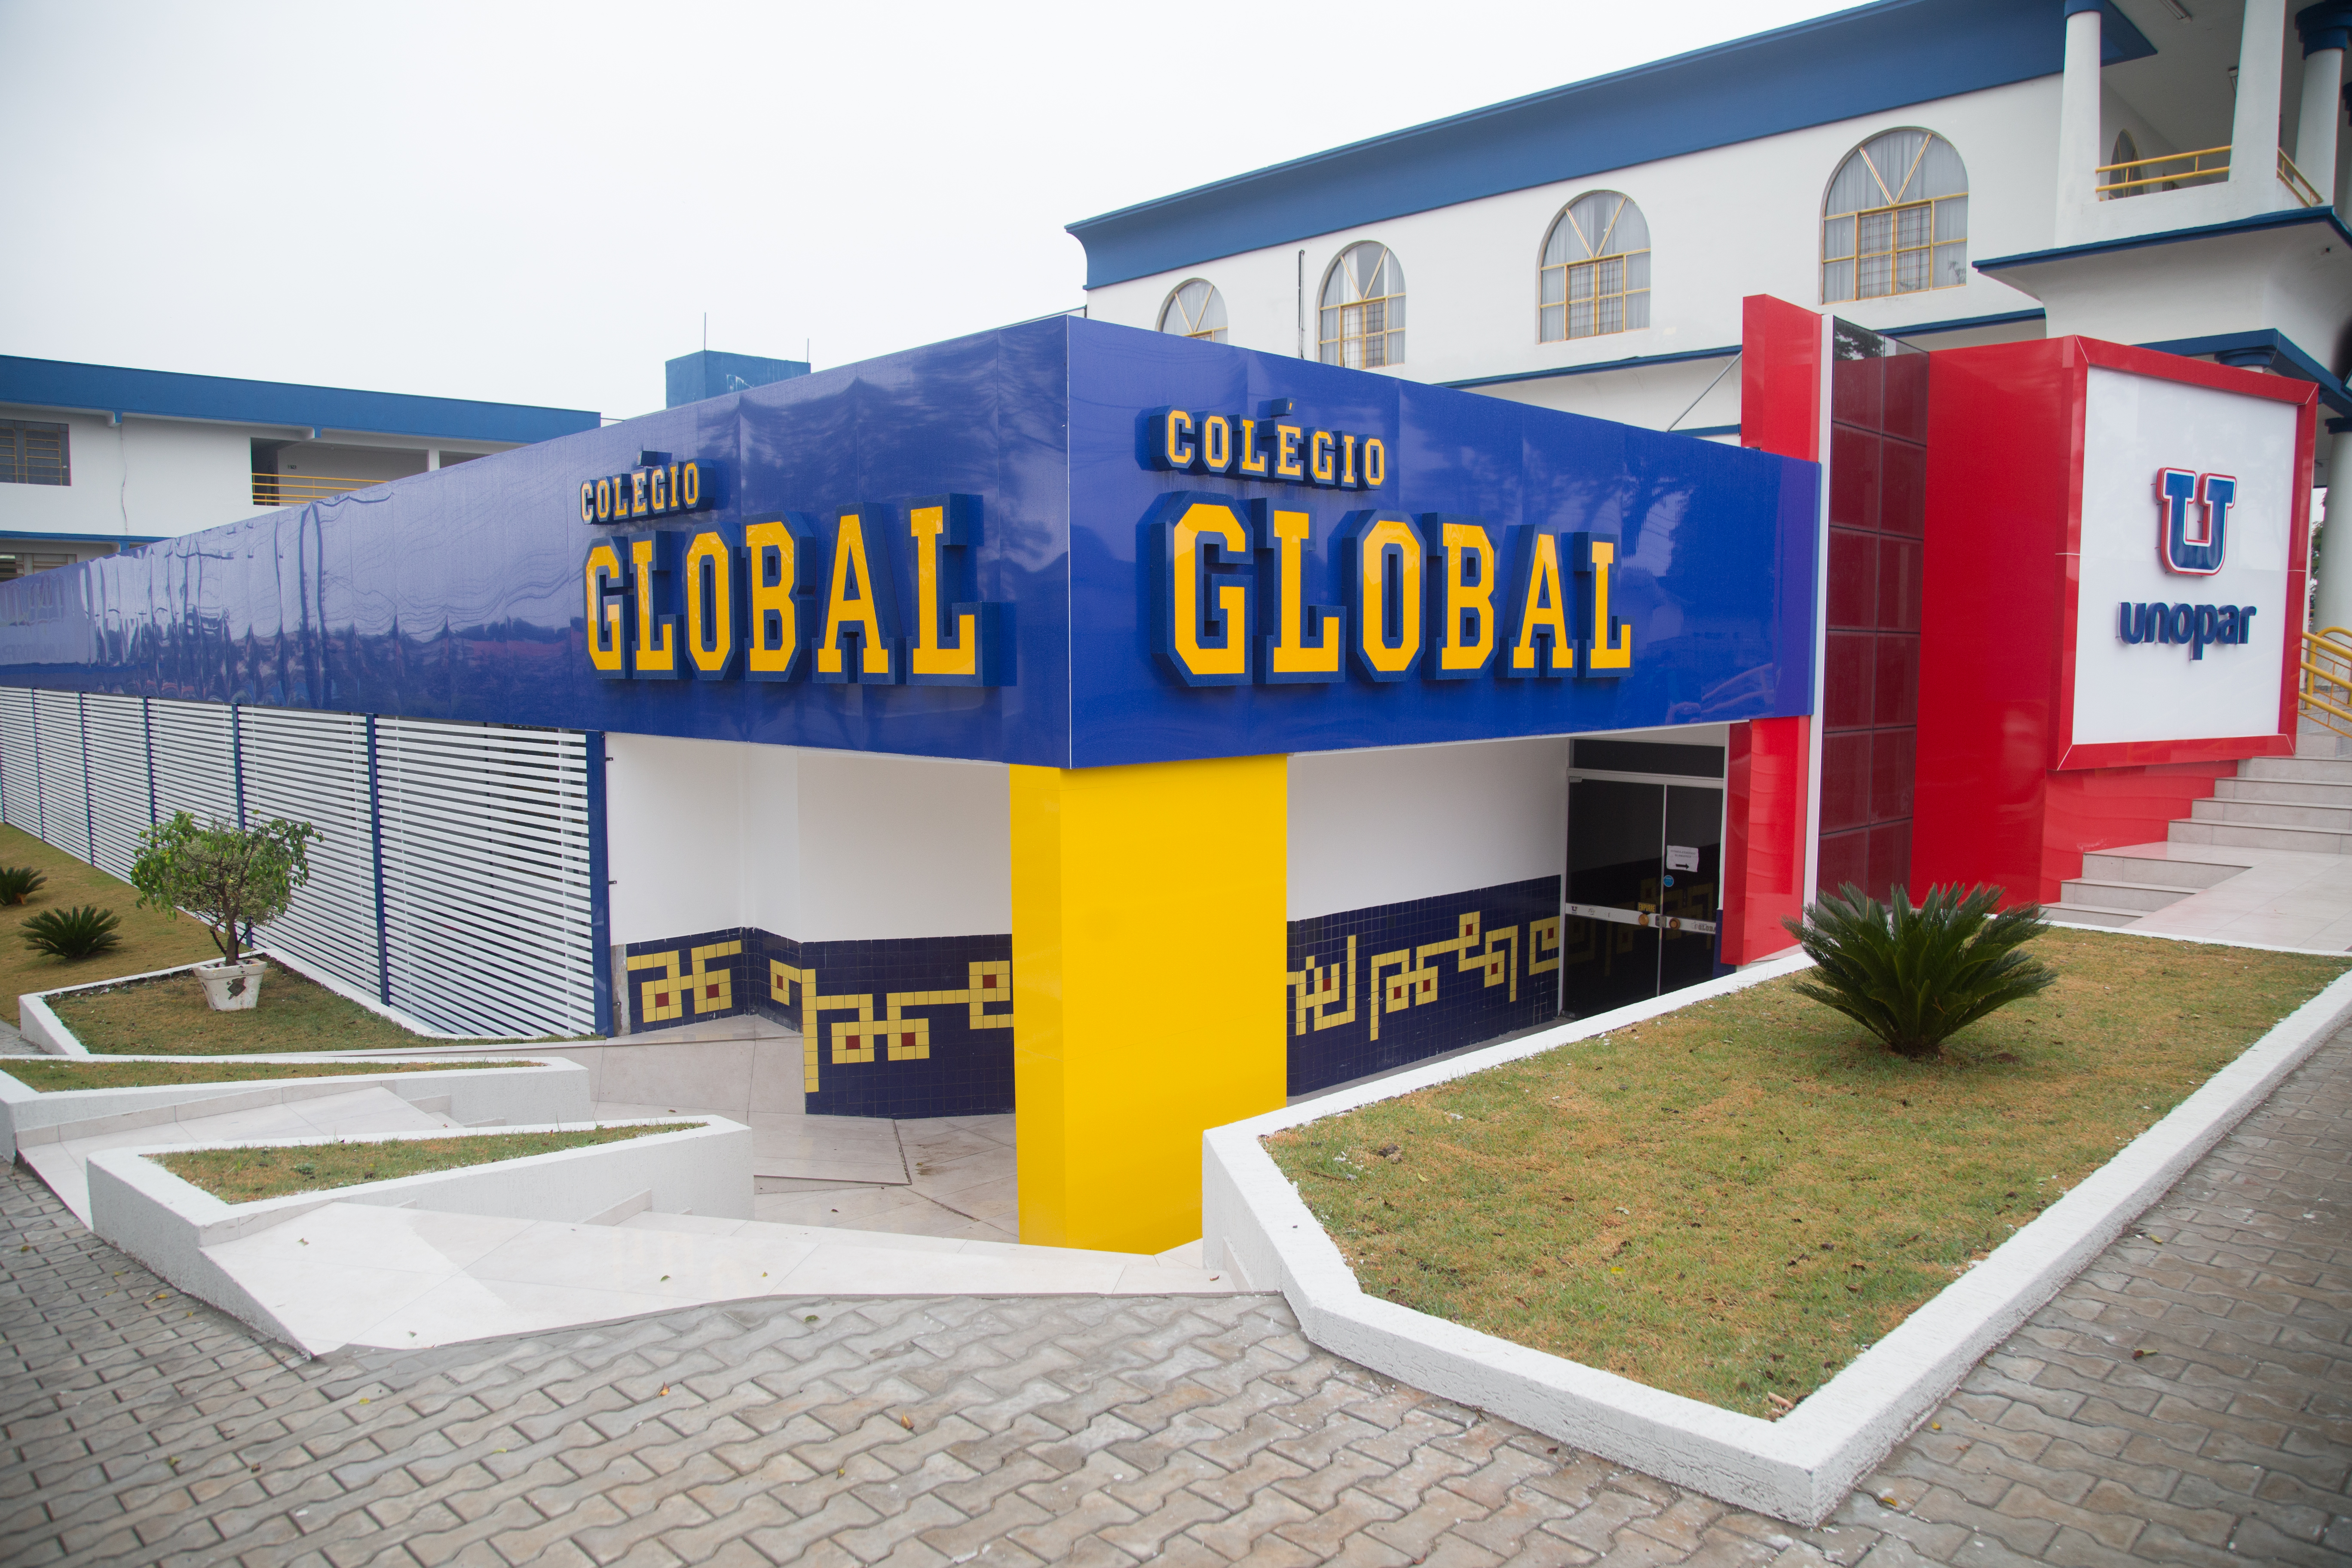 Colégio Global